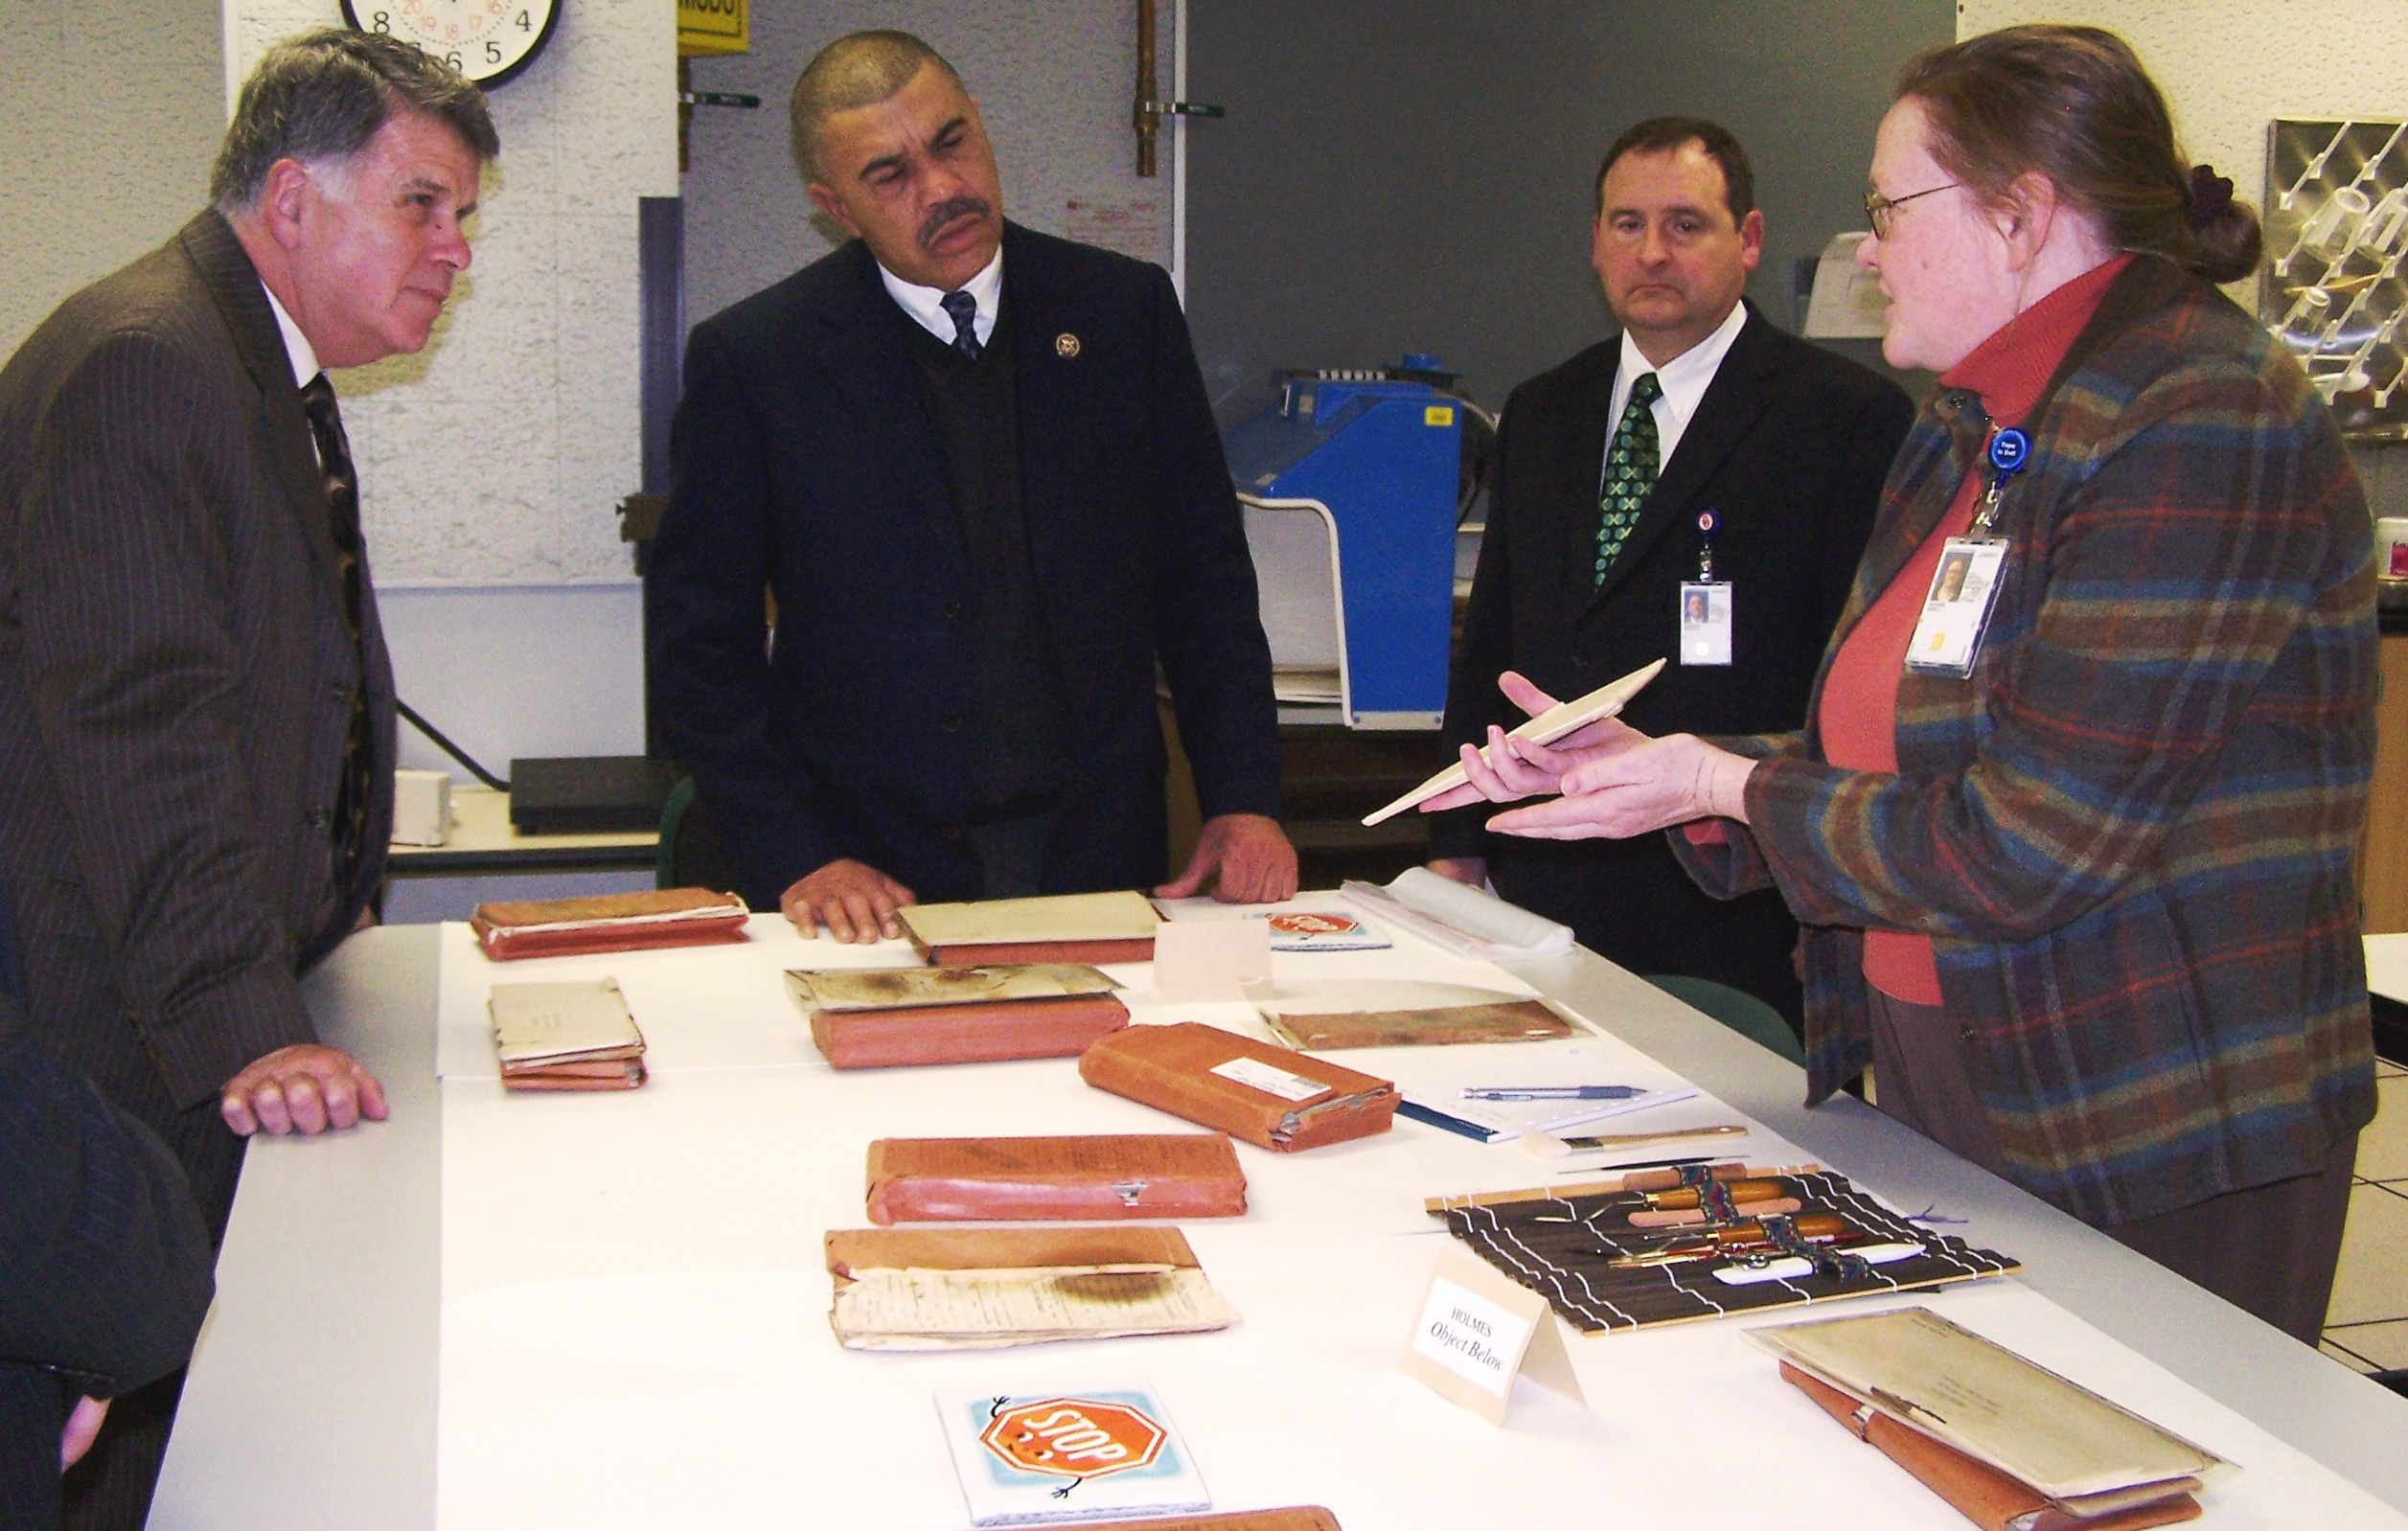 Congressman Clay and U.S. Archivist David Ferriero visit historic preservation lab at NARA in St. Louis